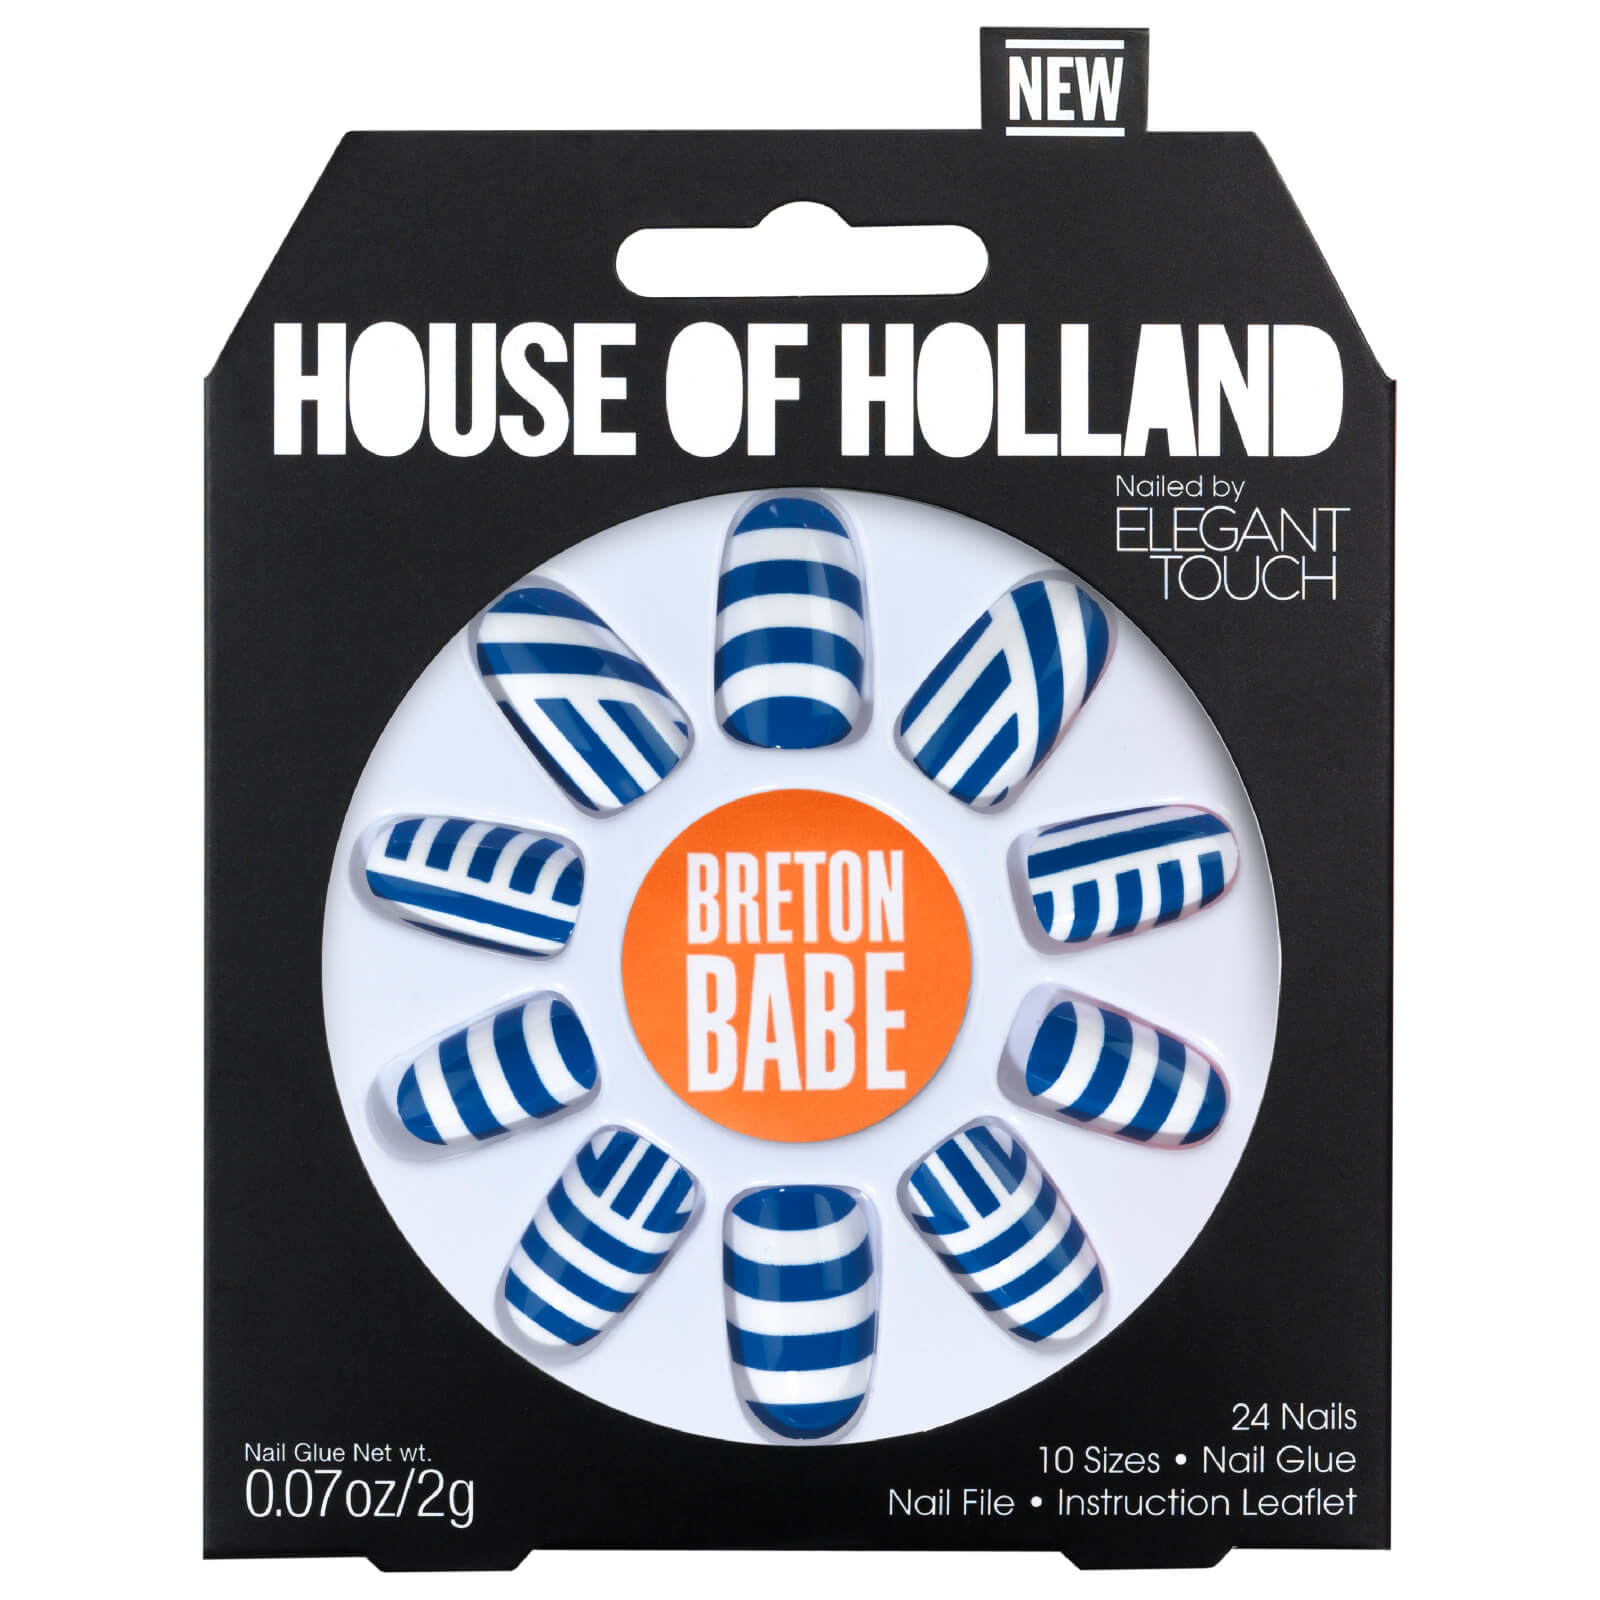 Uñas House of Holland V de Elegant Touch - Breton Babe